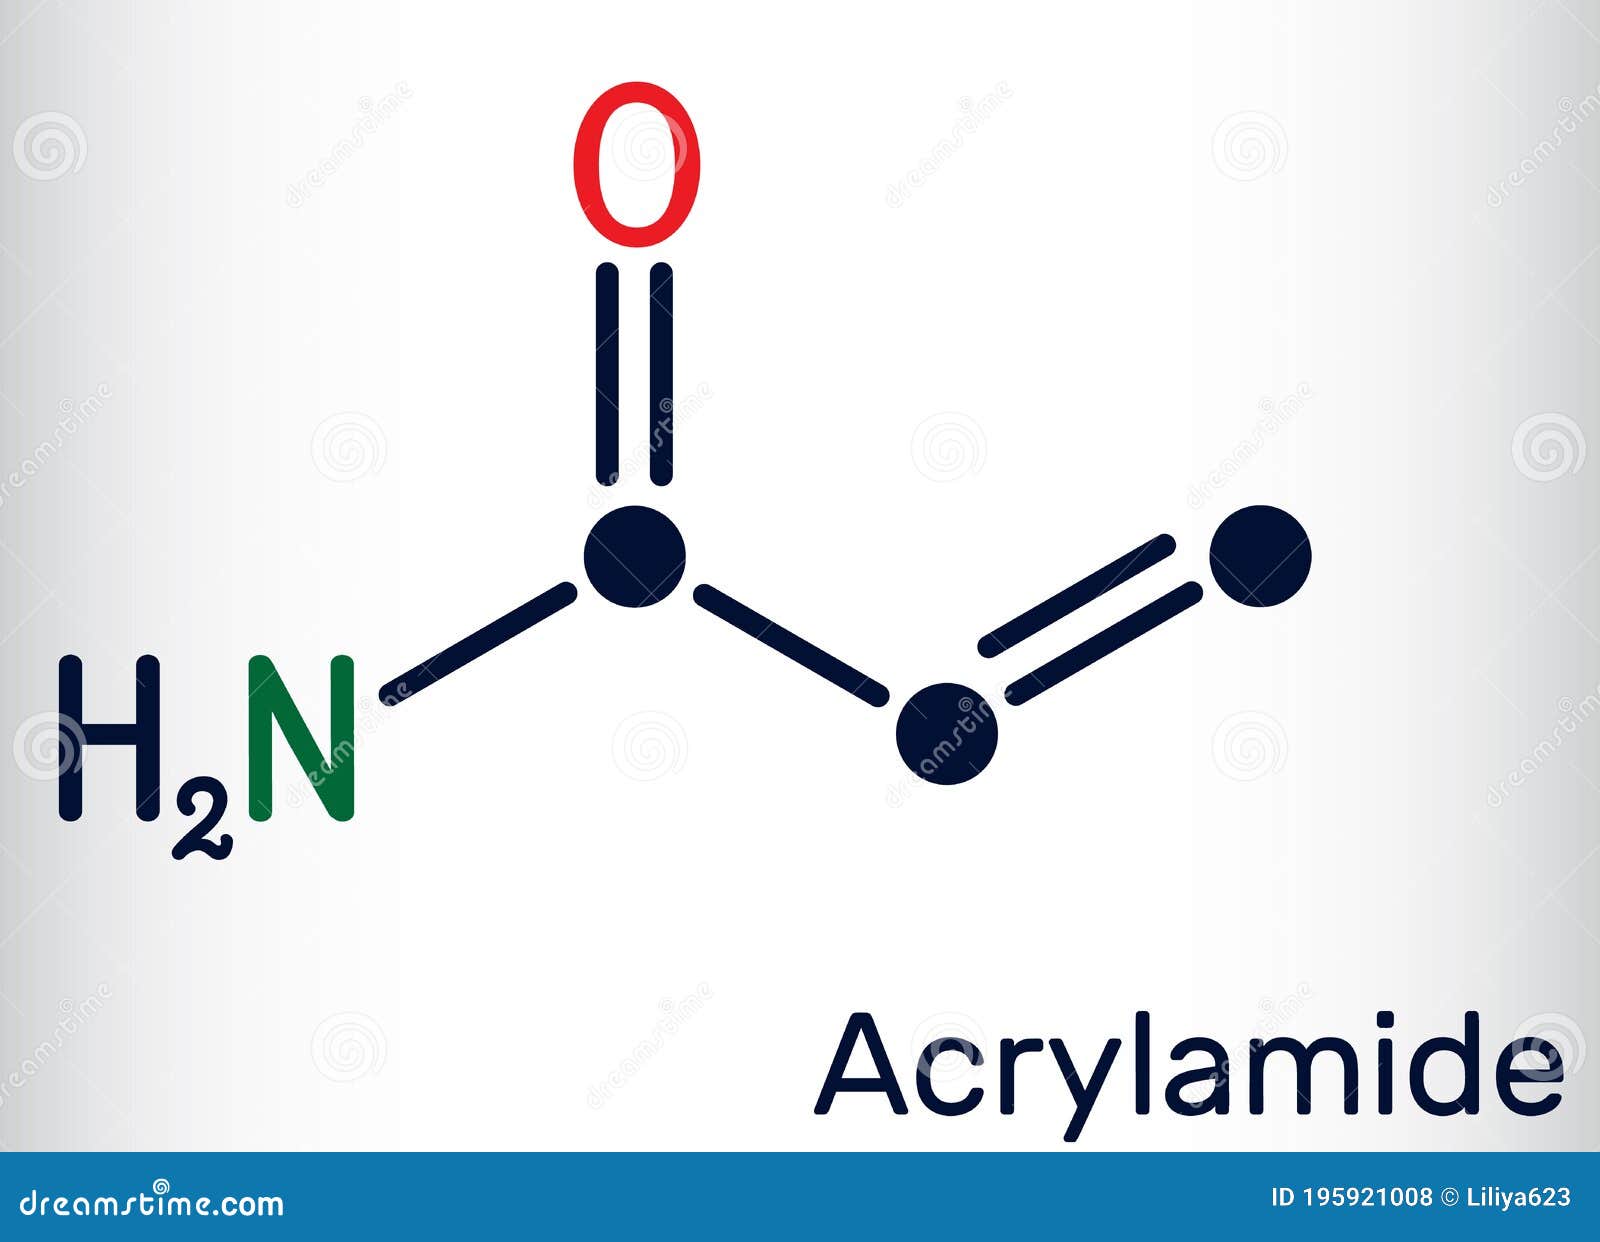 acrylamide, acr, acrylic amide molecule. it is as a precursor to polyacrylamides. skeletal chemical formula